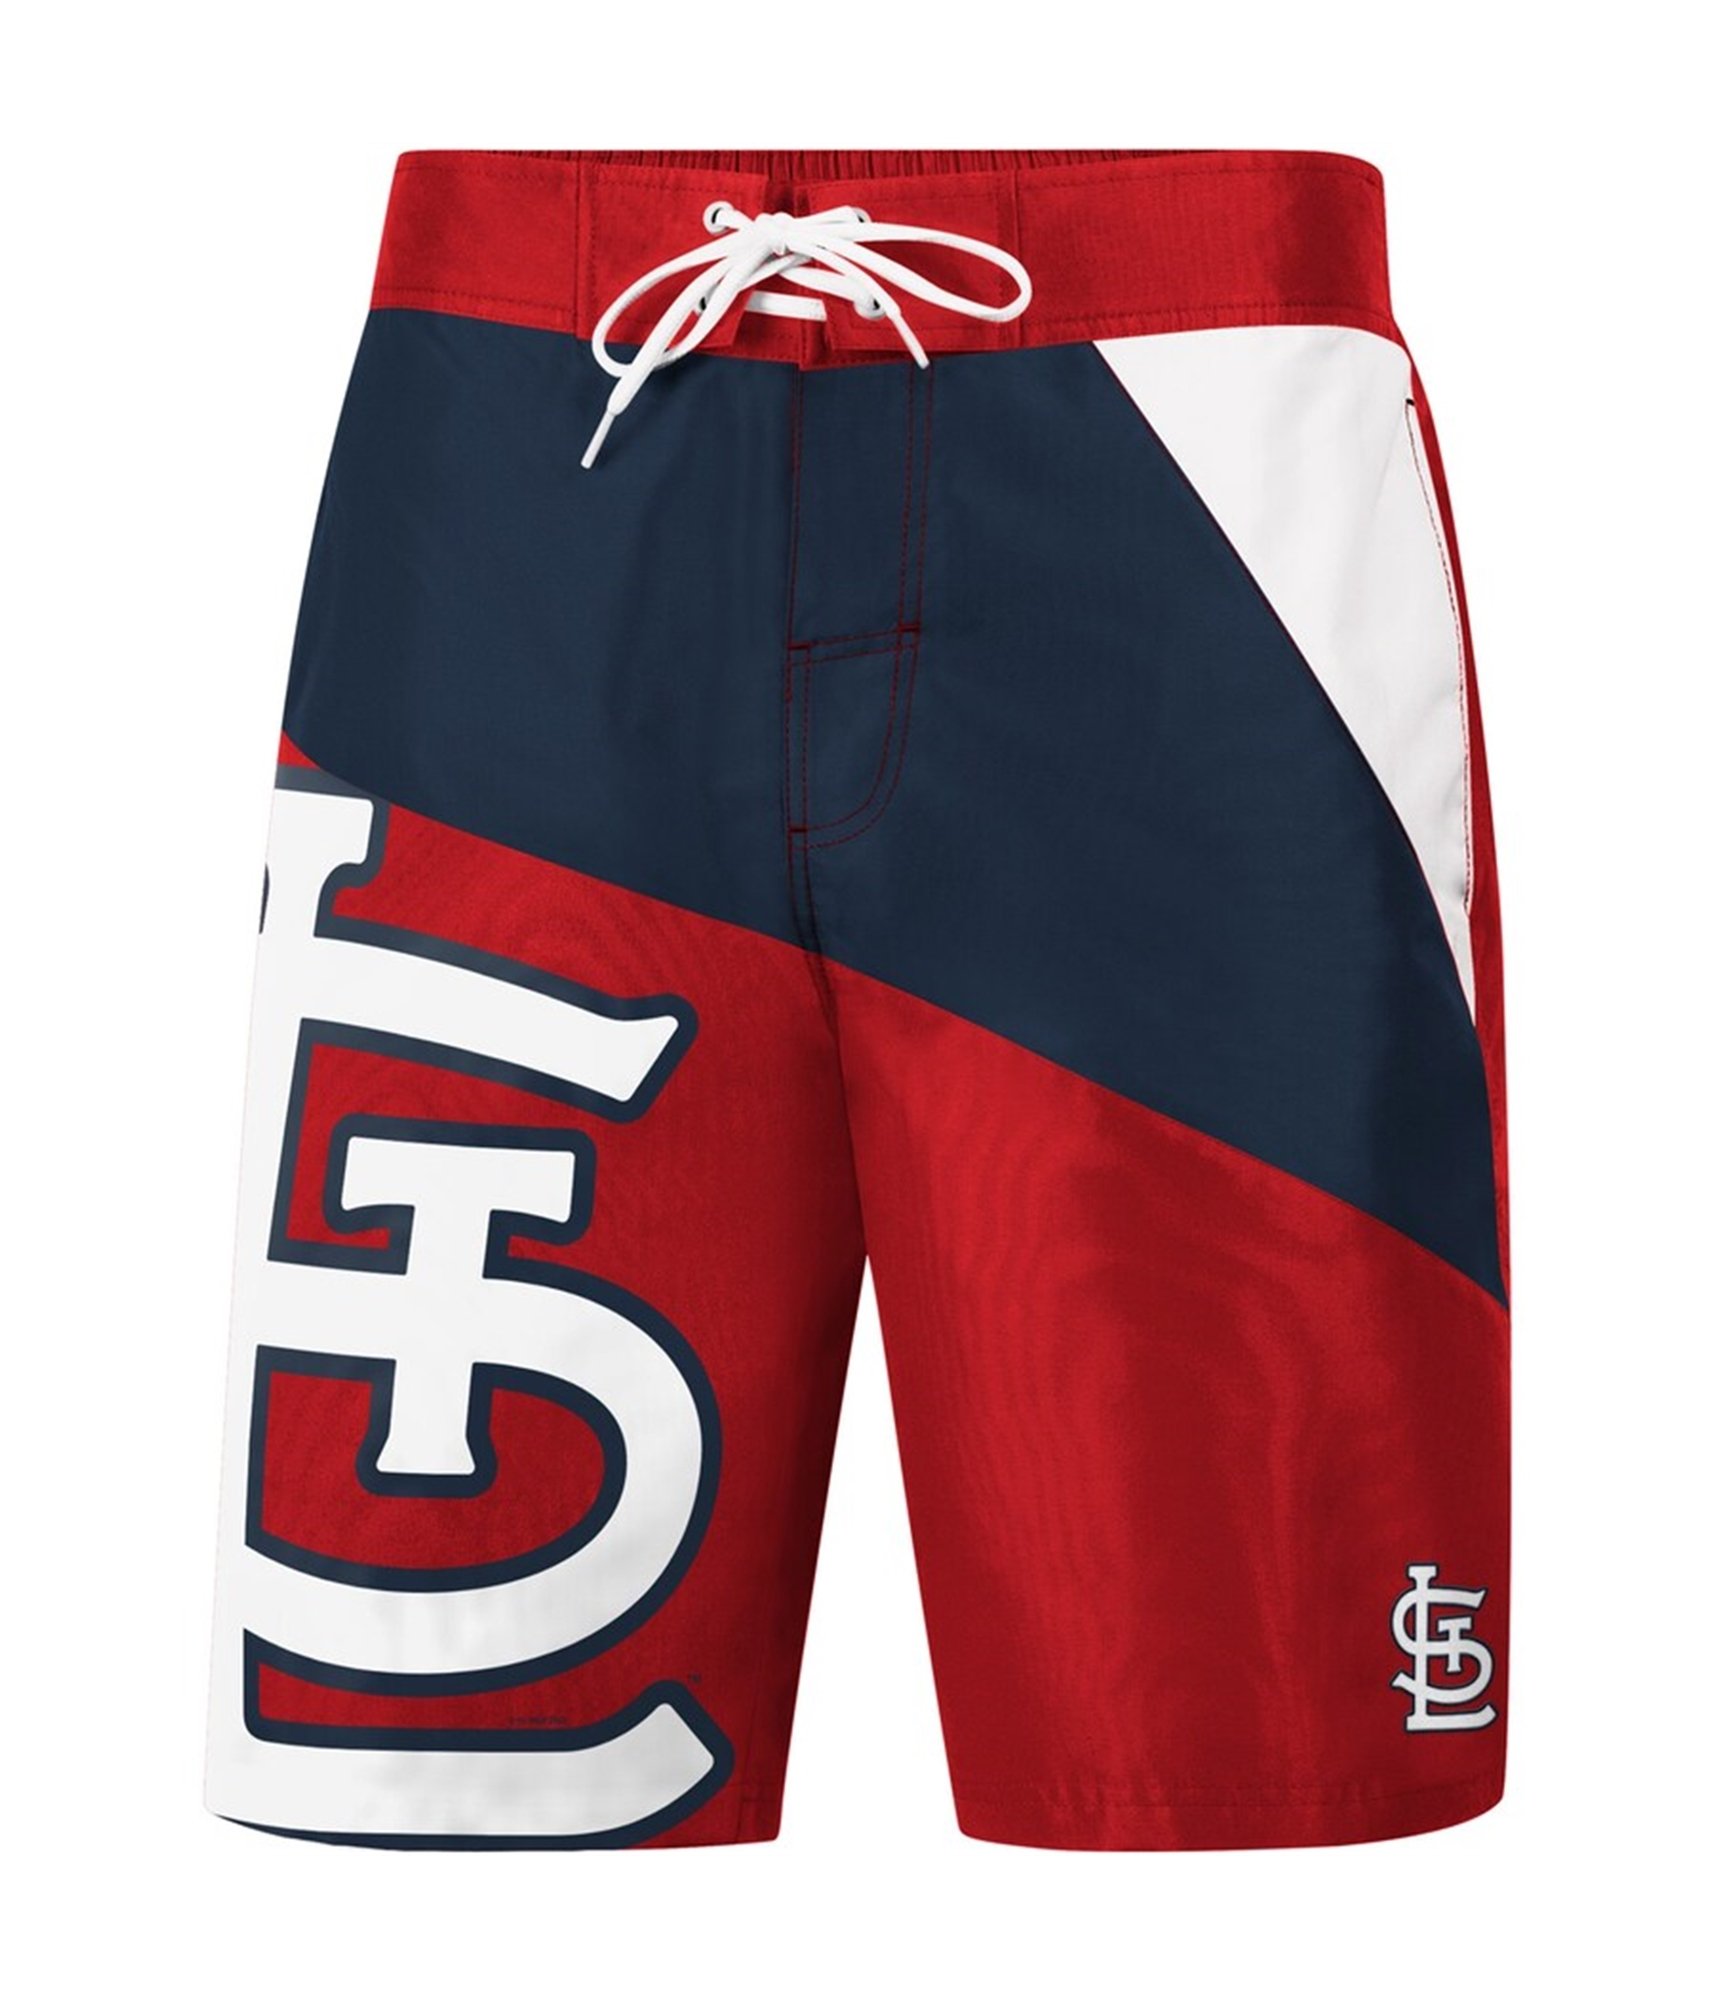 Buy a G-Iii Sports Mens St. Louis Cardinals Swim Bottom Trunks